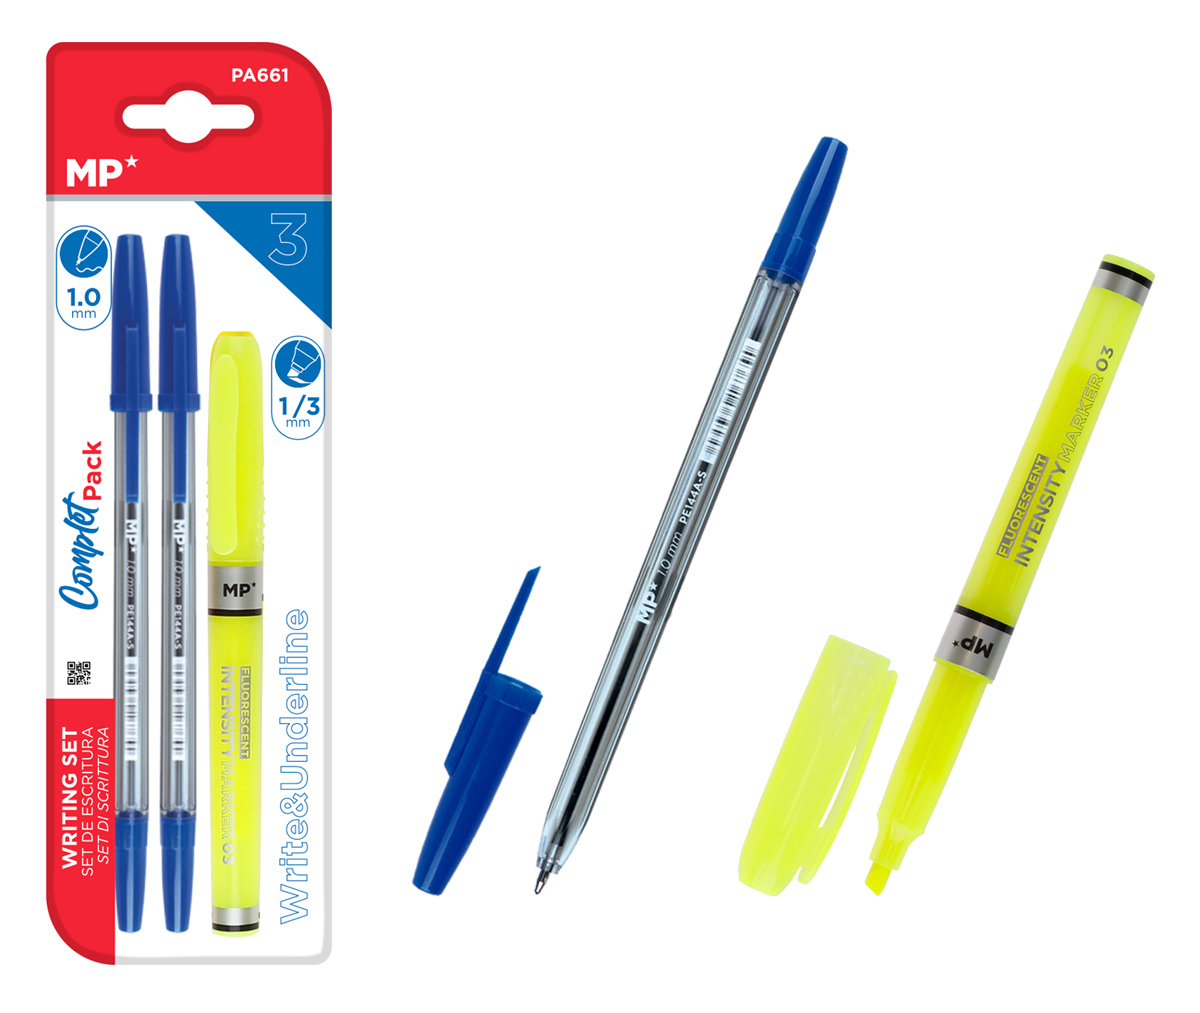 MP σετ στυλό & μαρκαδόρος υπογράμμισης PA661, μπλε & κίτρινο, 3τμχ - MP 116220